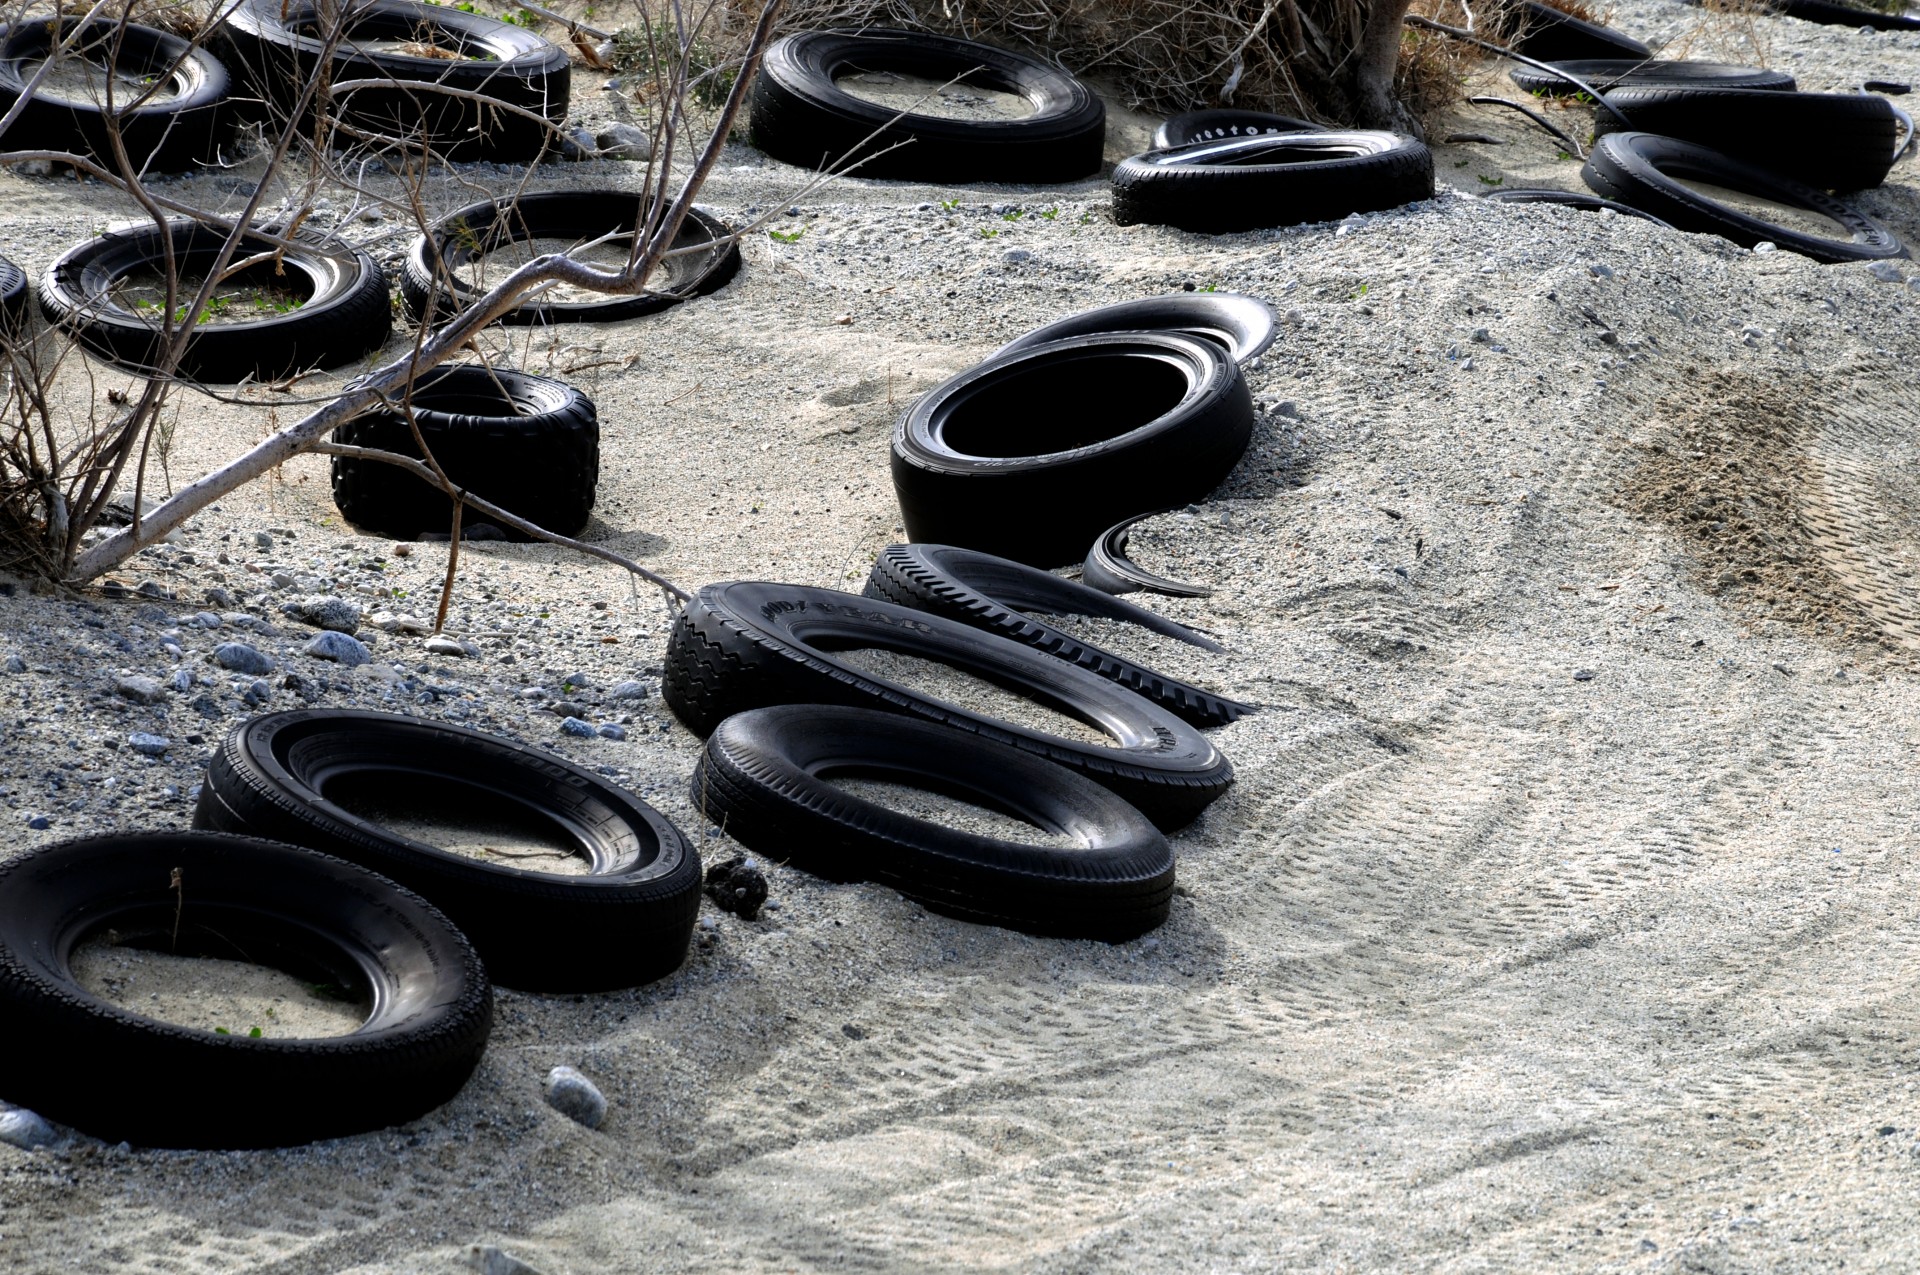 Black Tires In White Sand